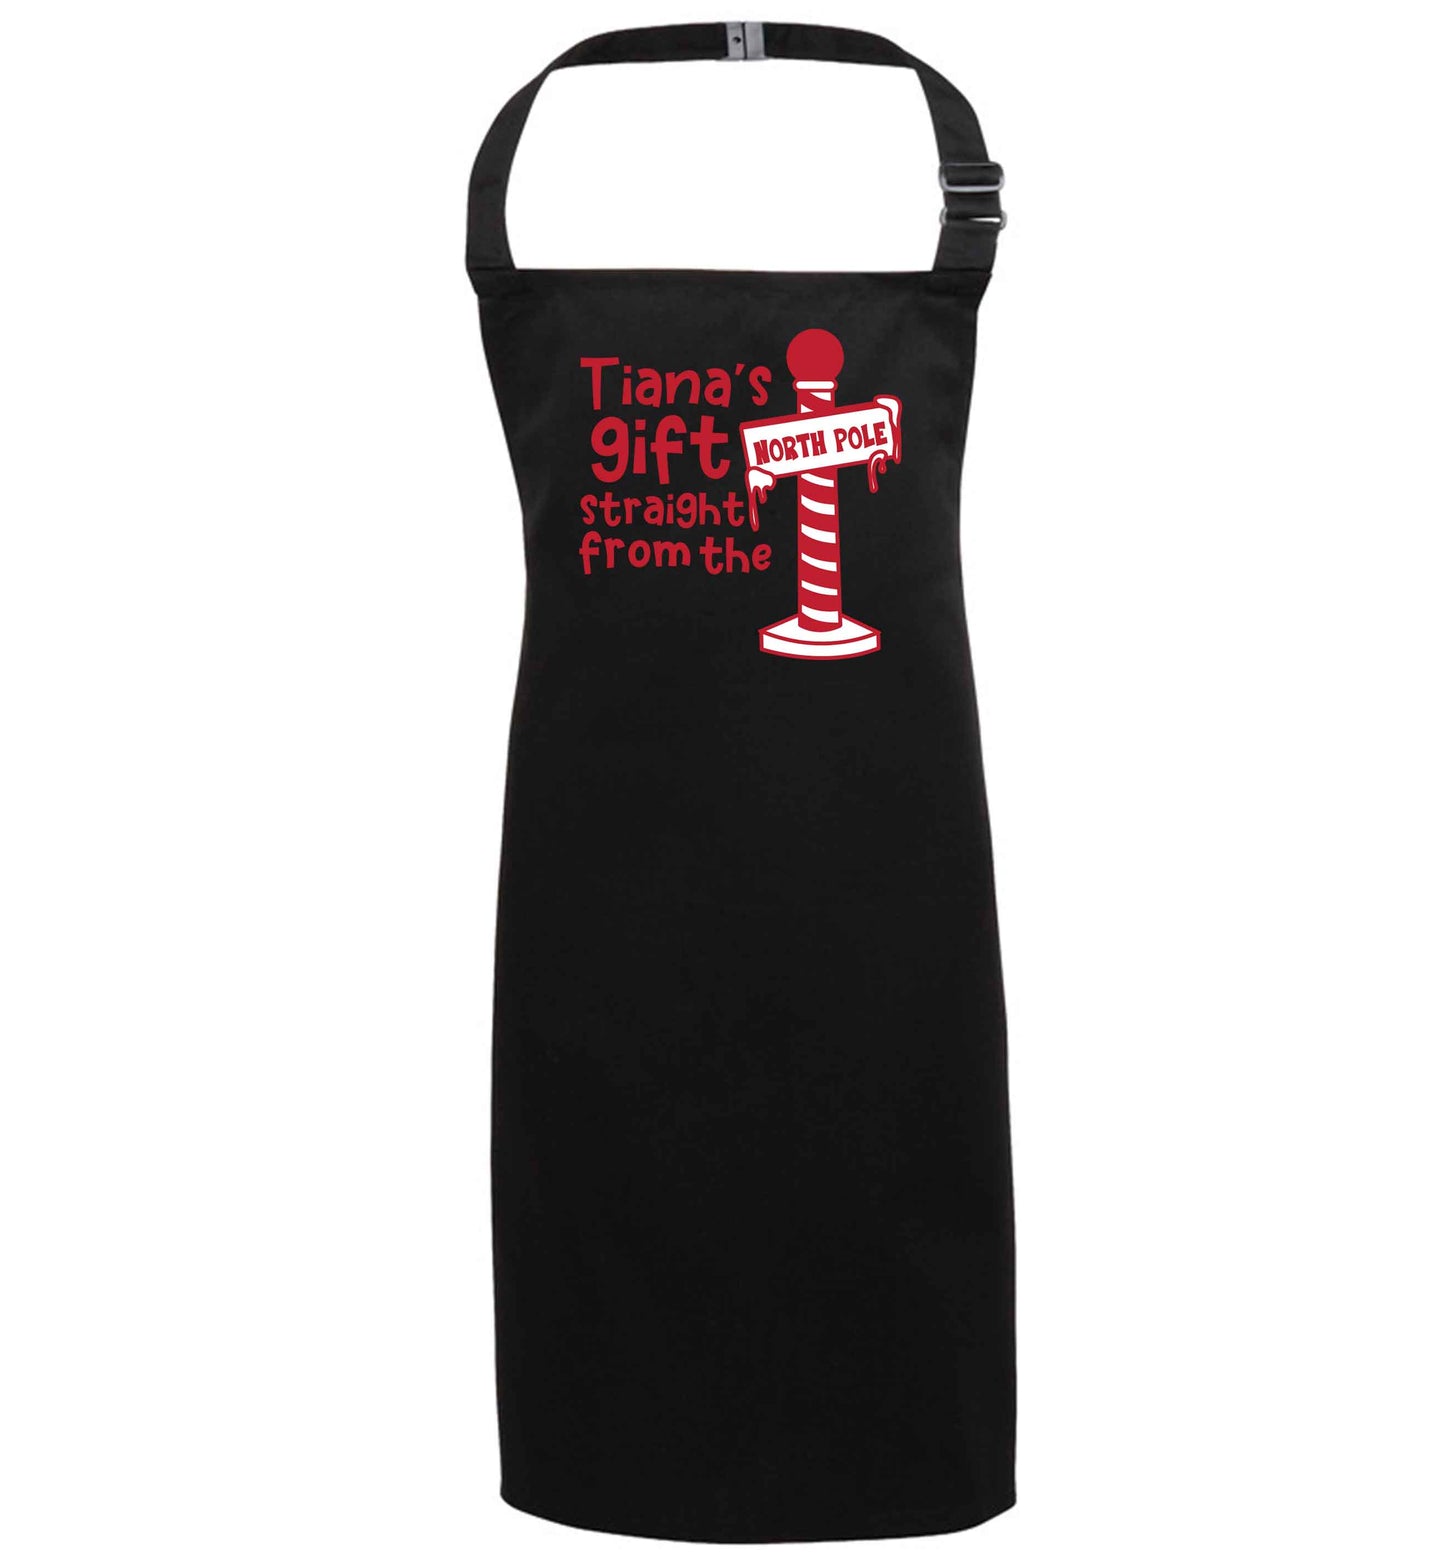 Merry Christmas black apron 7-10 years